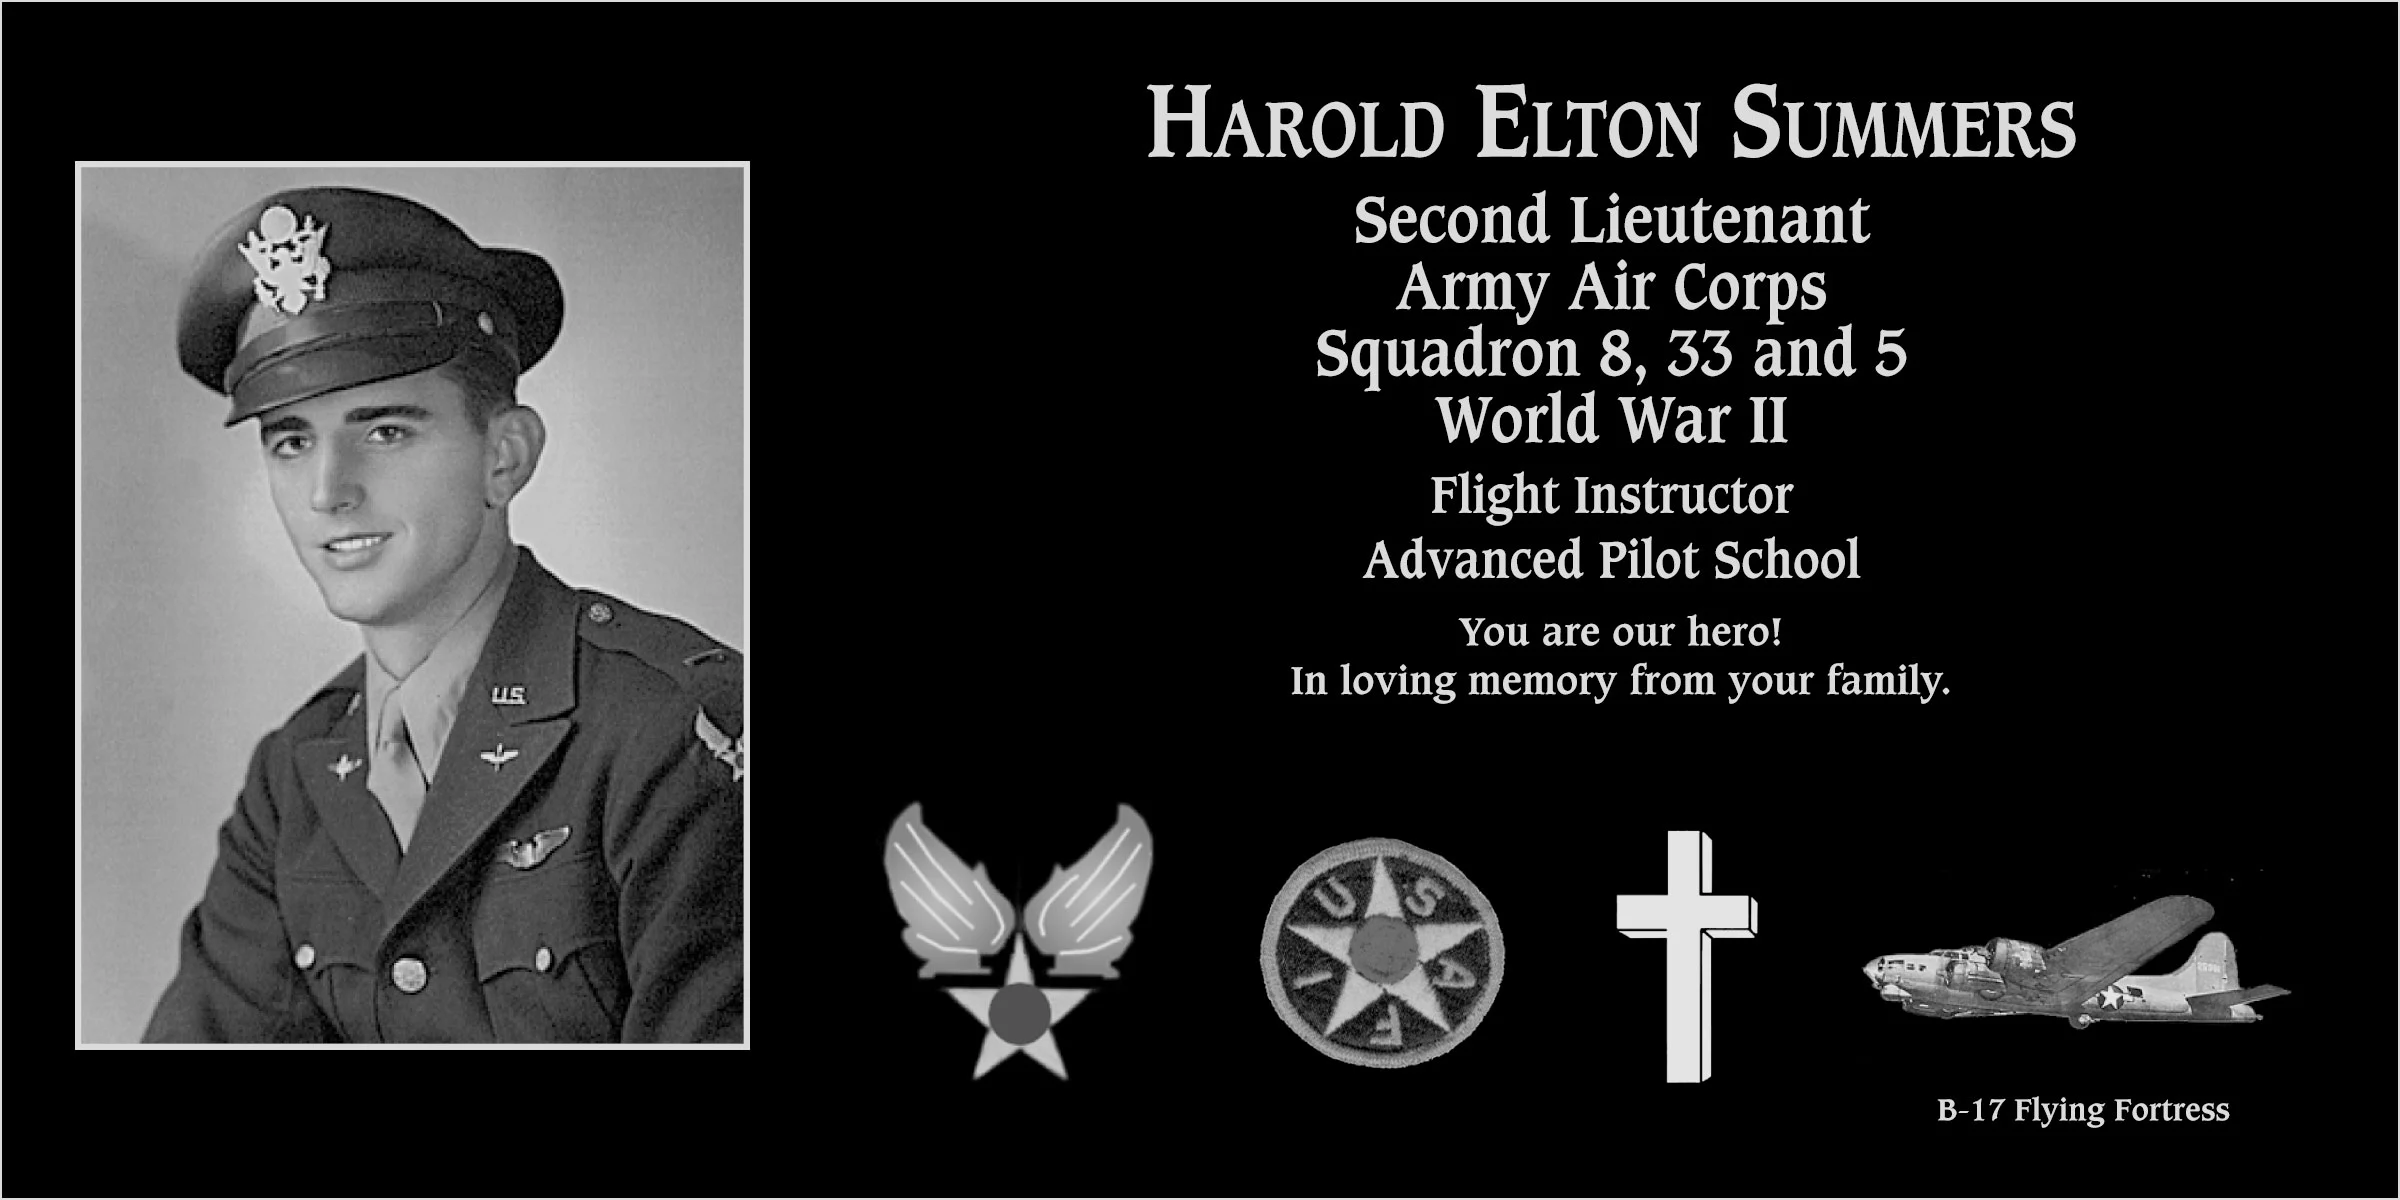 Harold Elton Summers